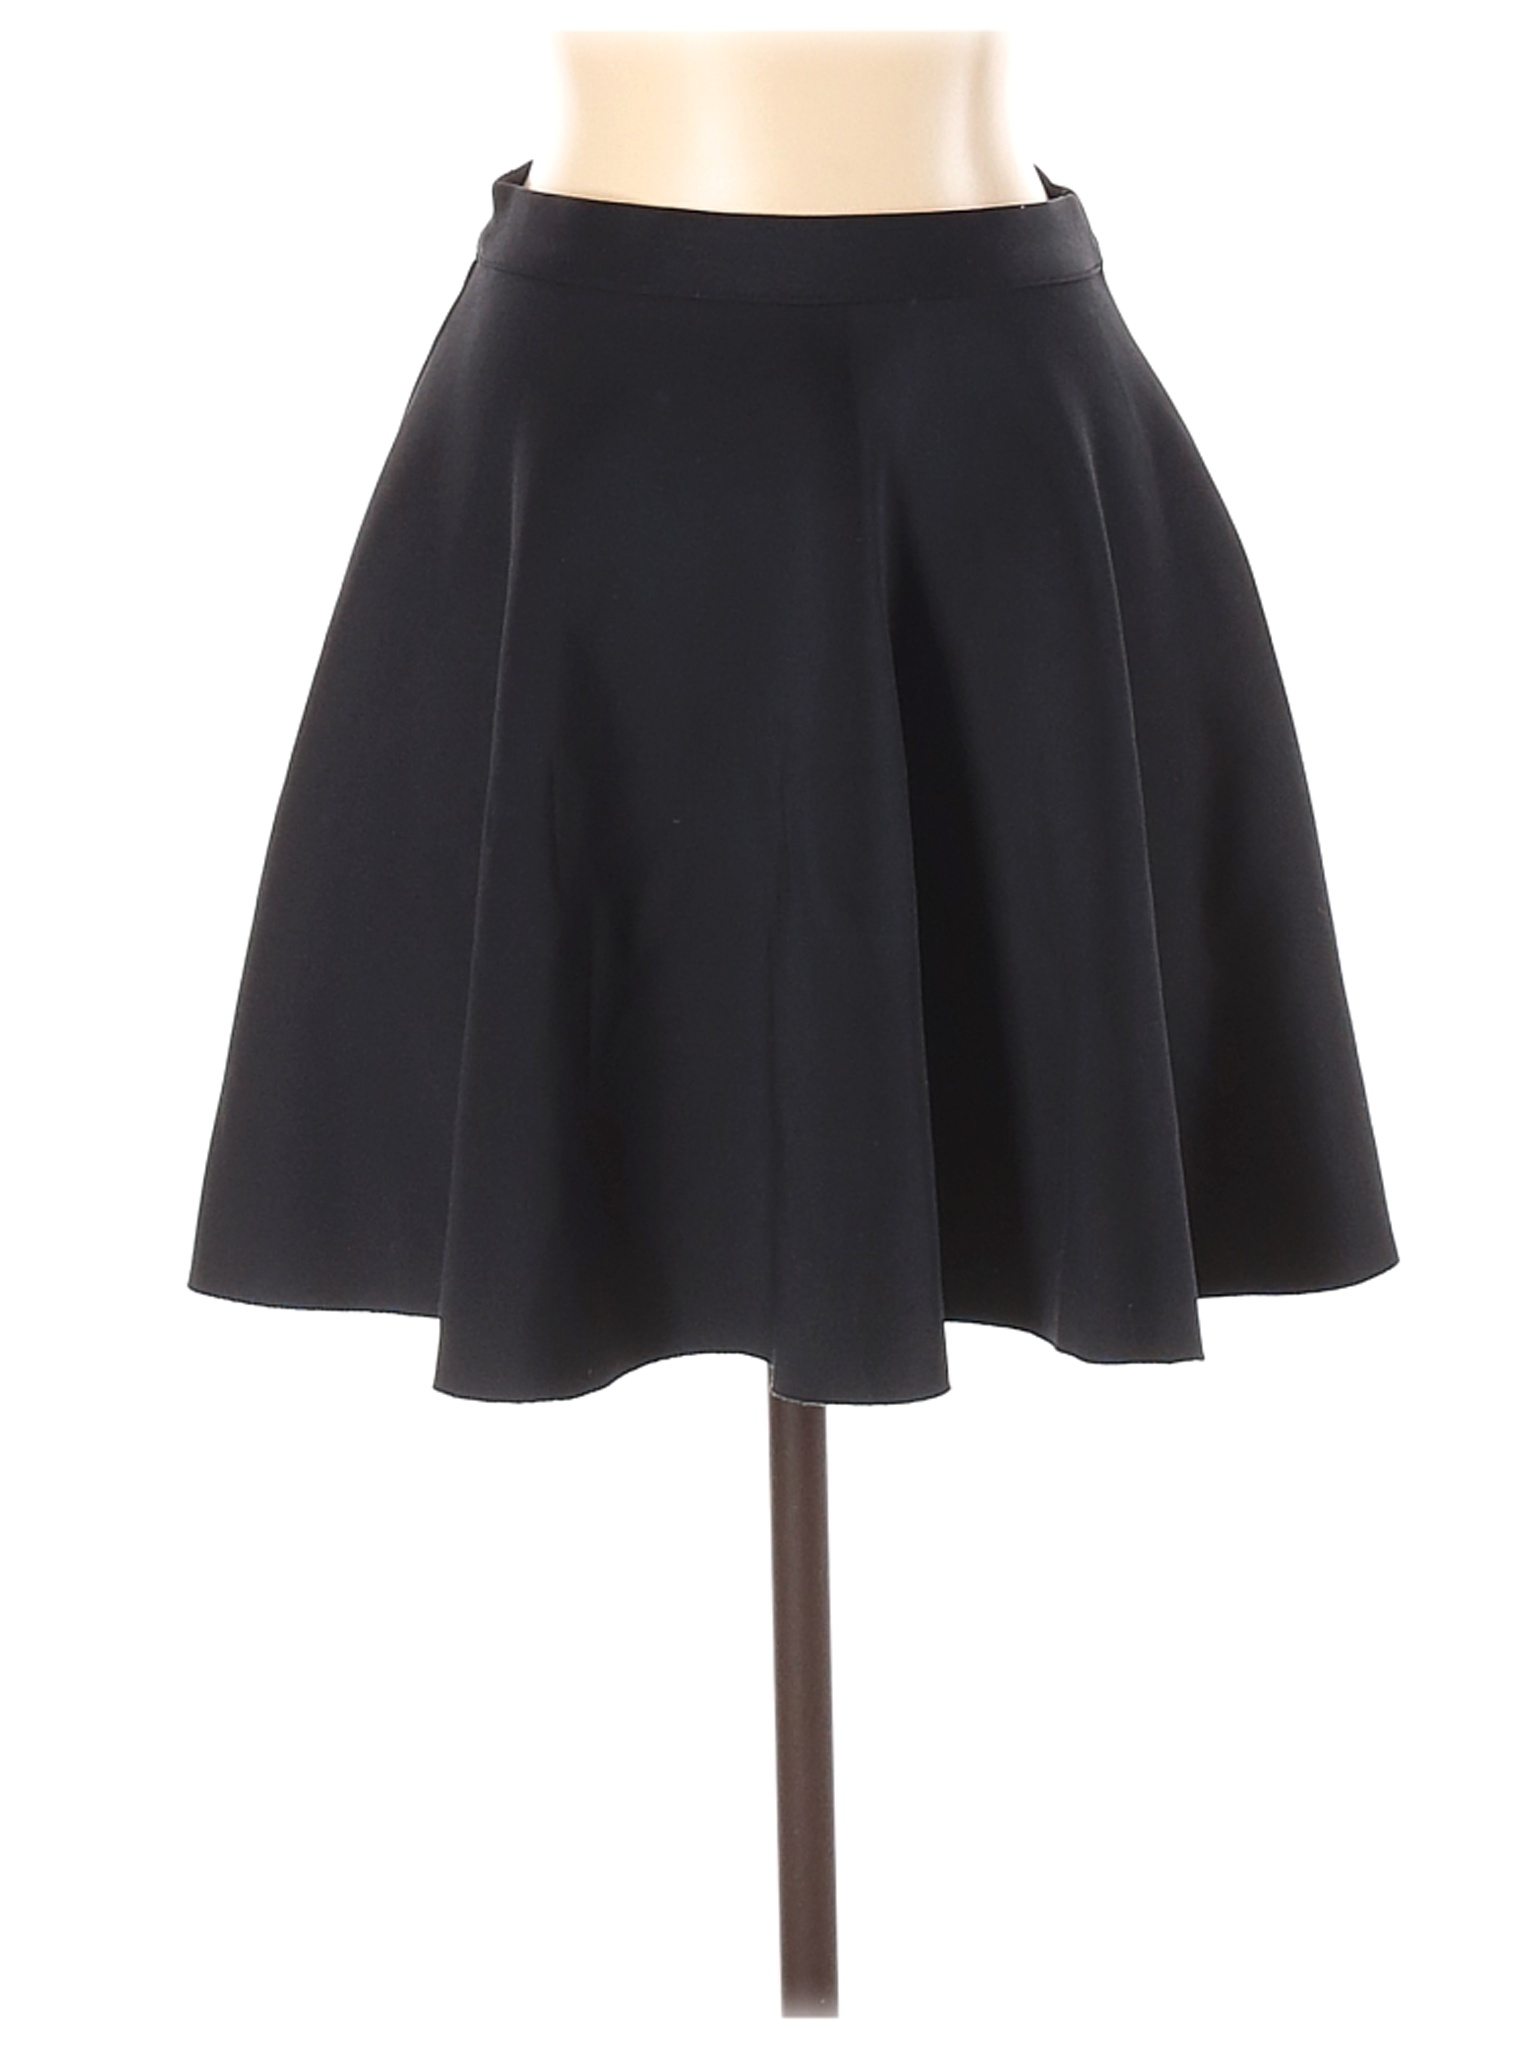 Abercrombie & Fitch Women Black Casual Skirt XS | eBay